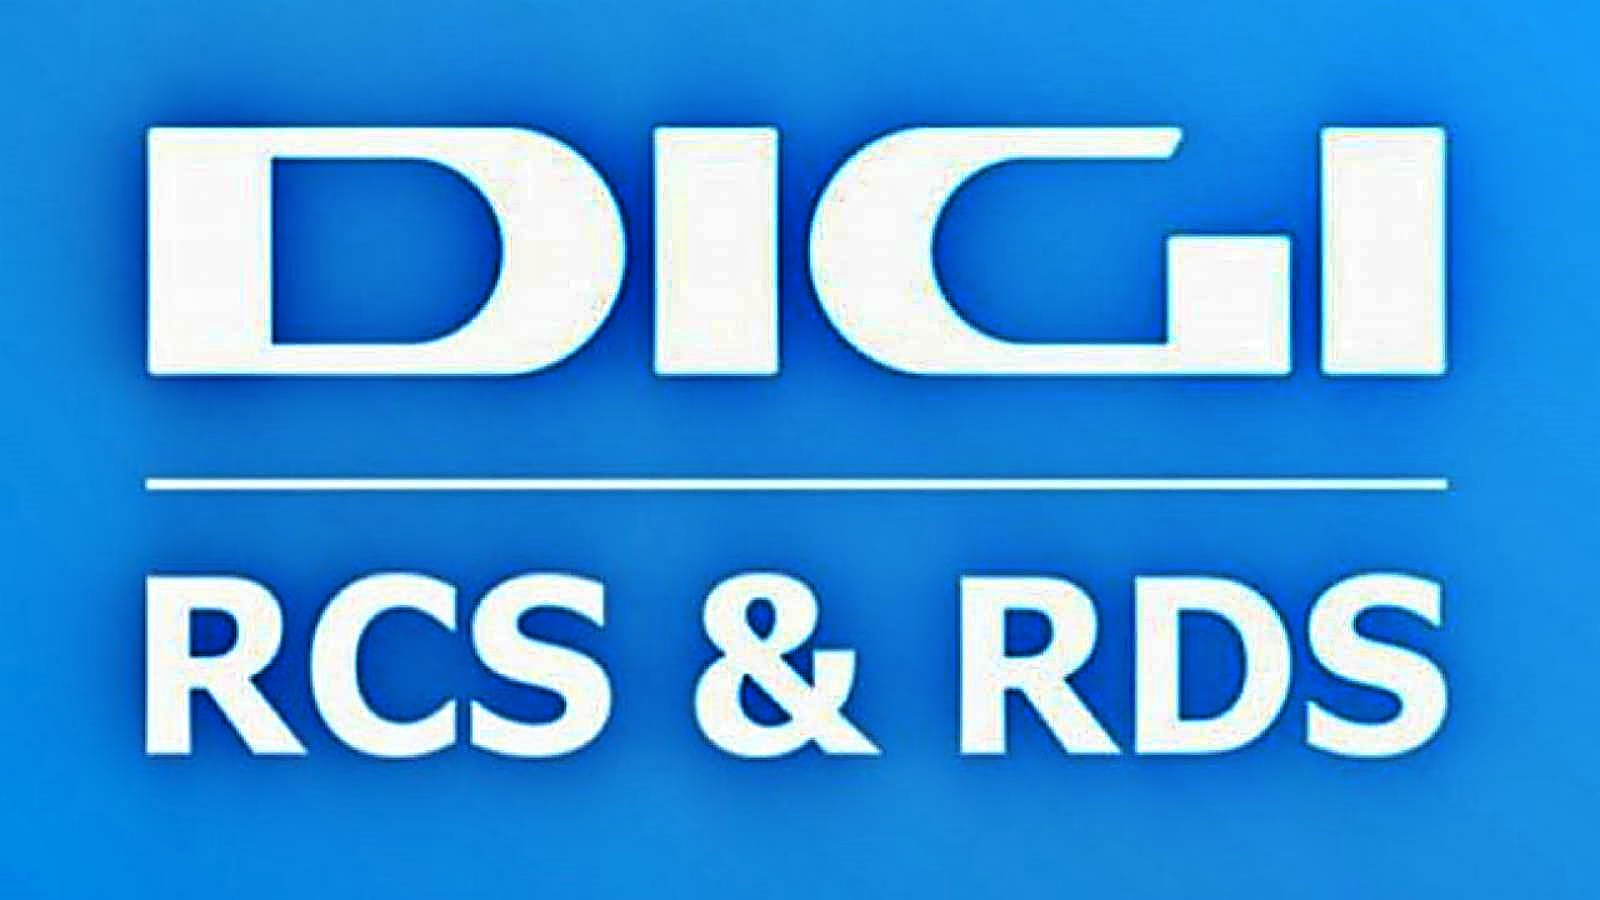 DIGI RCS & RDS Beneficiul URIAS care Nu Stiu Multi Clienti